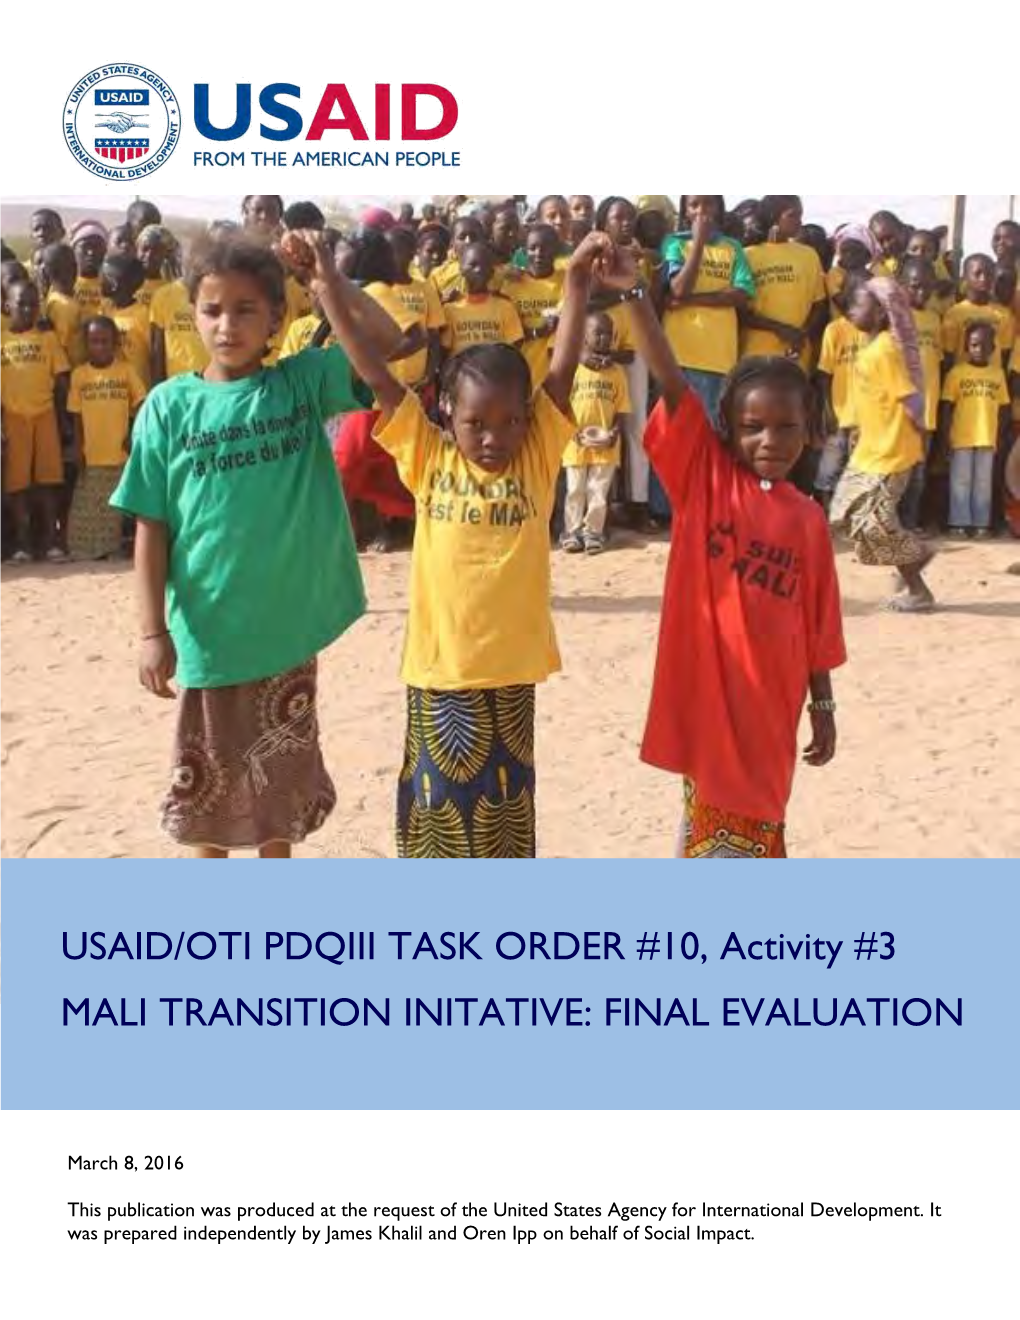 Mali Transition Initiative Final Evaluation Scope of Work